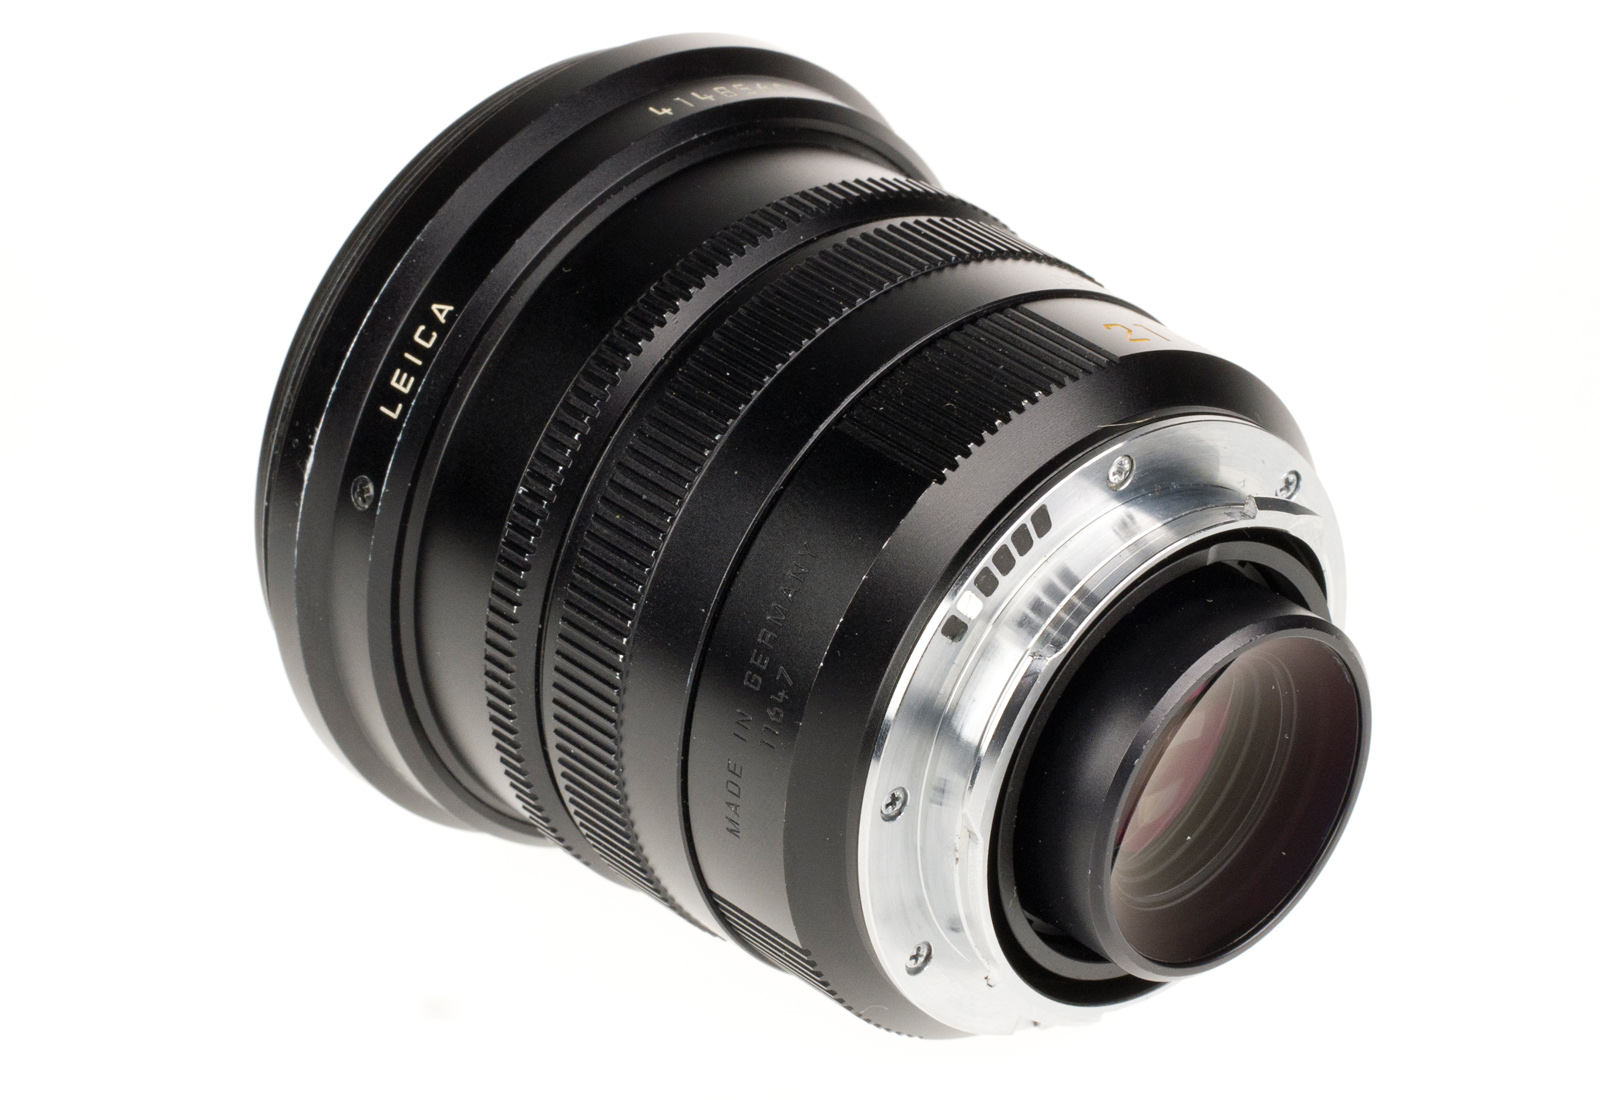 Leica Summilux-M 1:1,4/21mm ASPH. black 11647